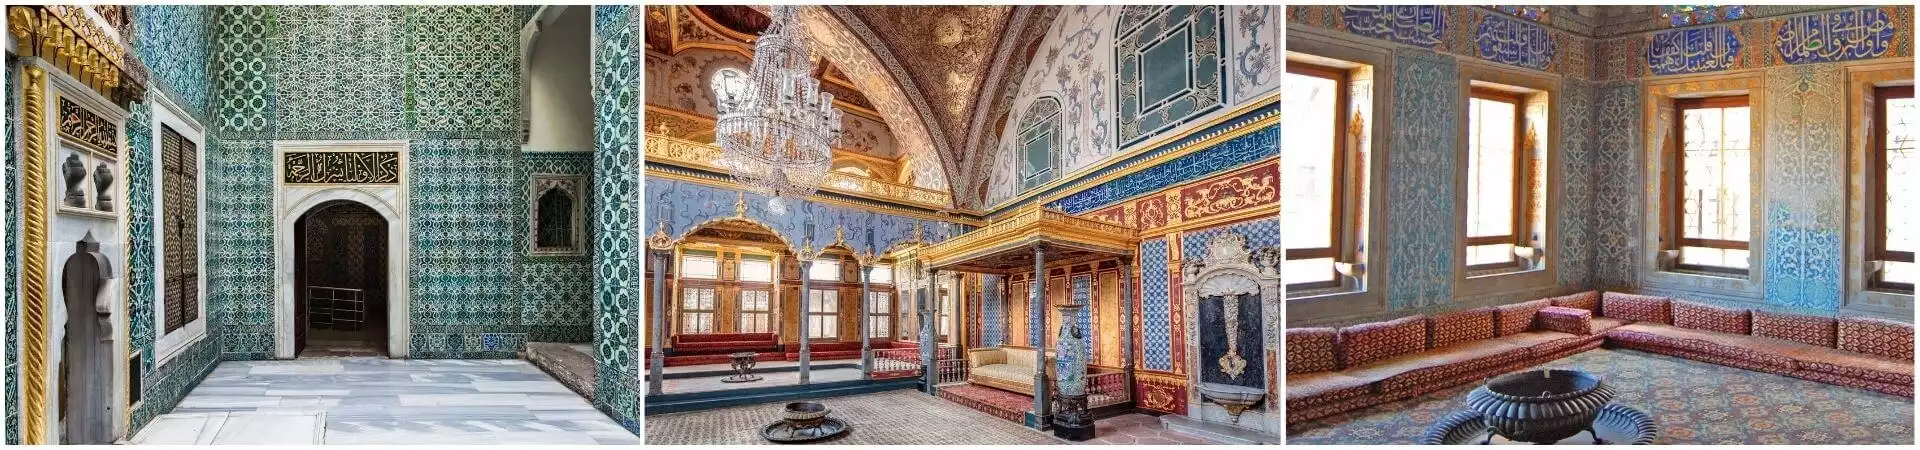 Topkapi Palace Harem Section Entrance